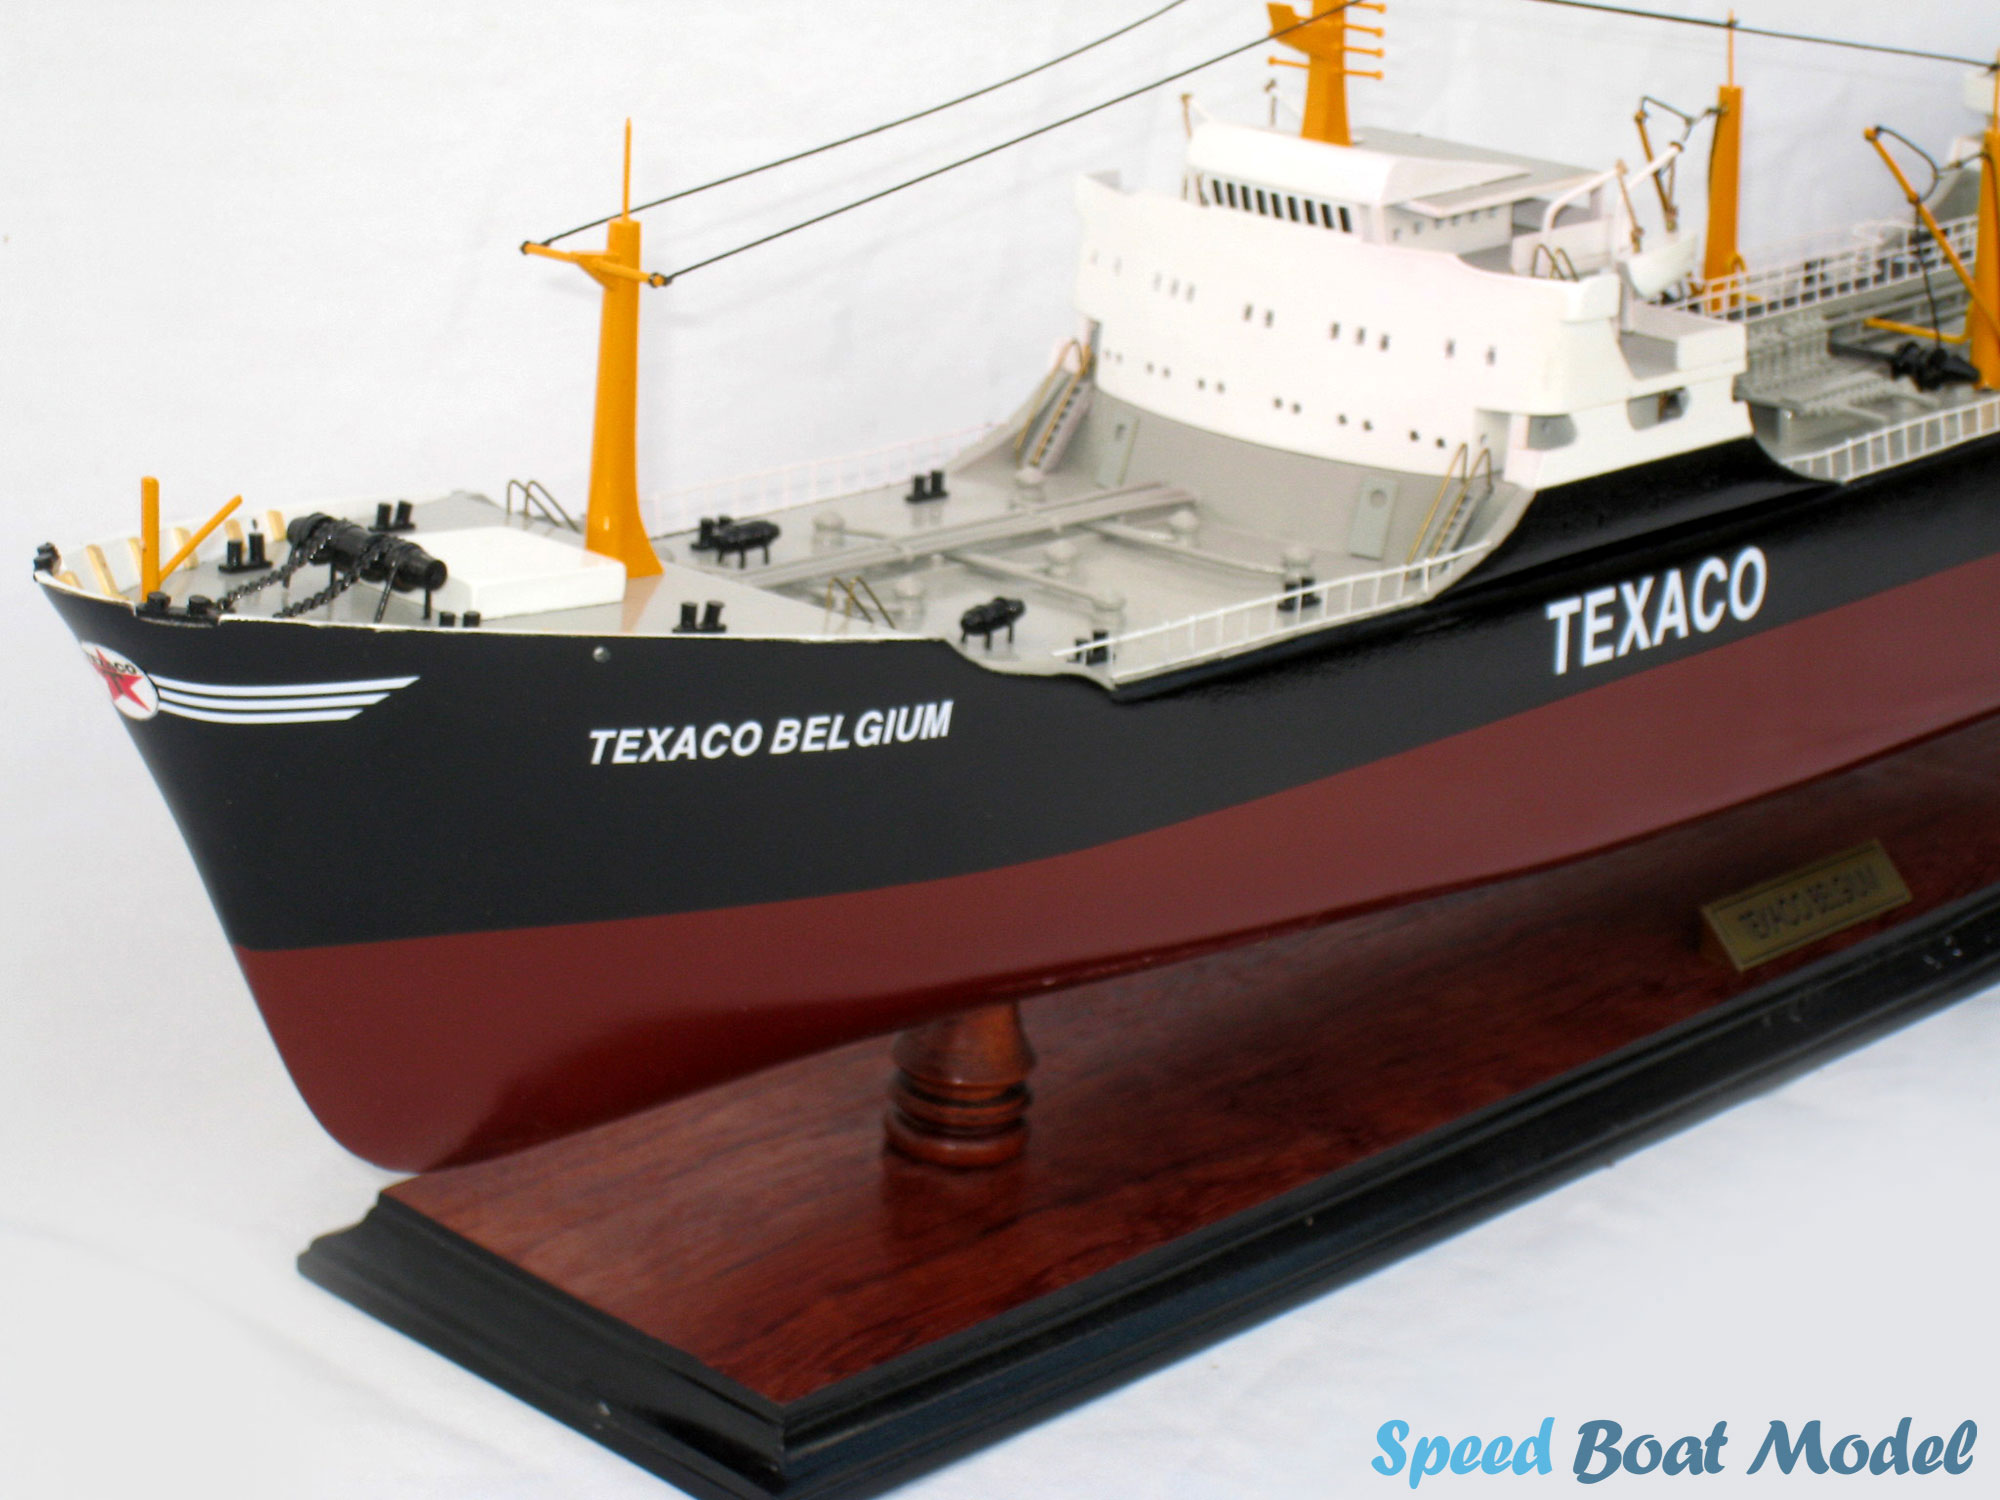 Texaco Belgium Commercial Ship Model 31.5"